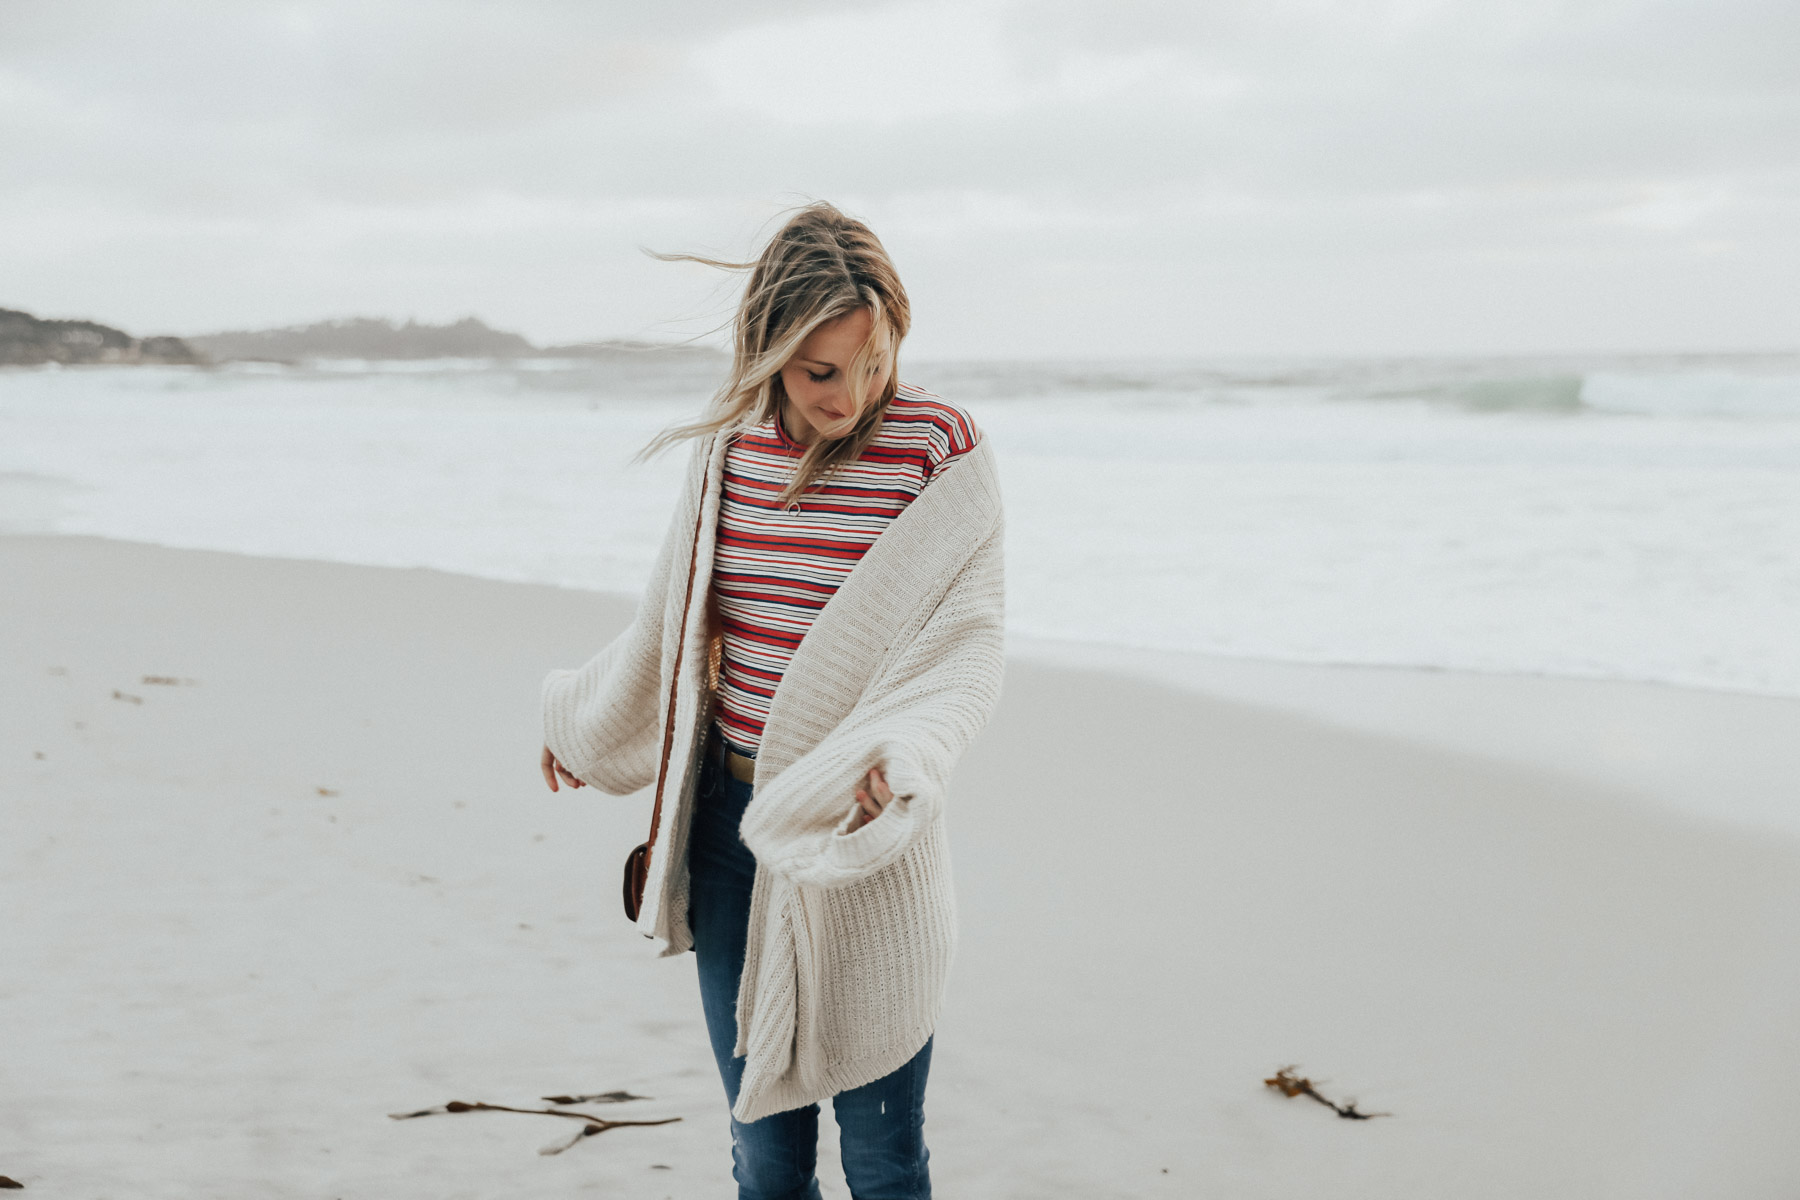 amanda holstein in madewell tee, urban outfitters sweater on beach